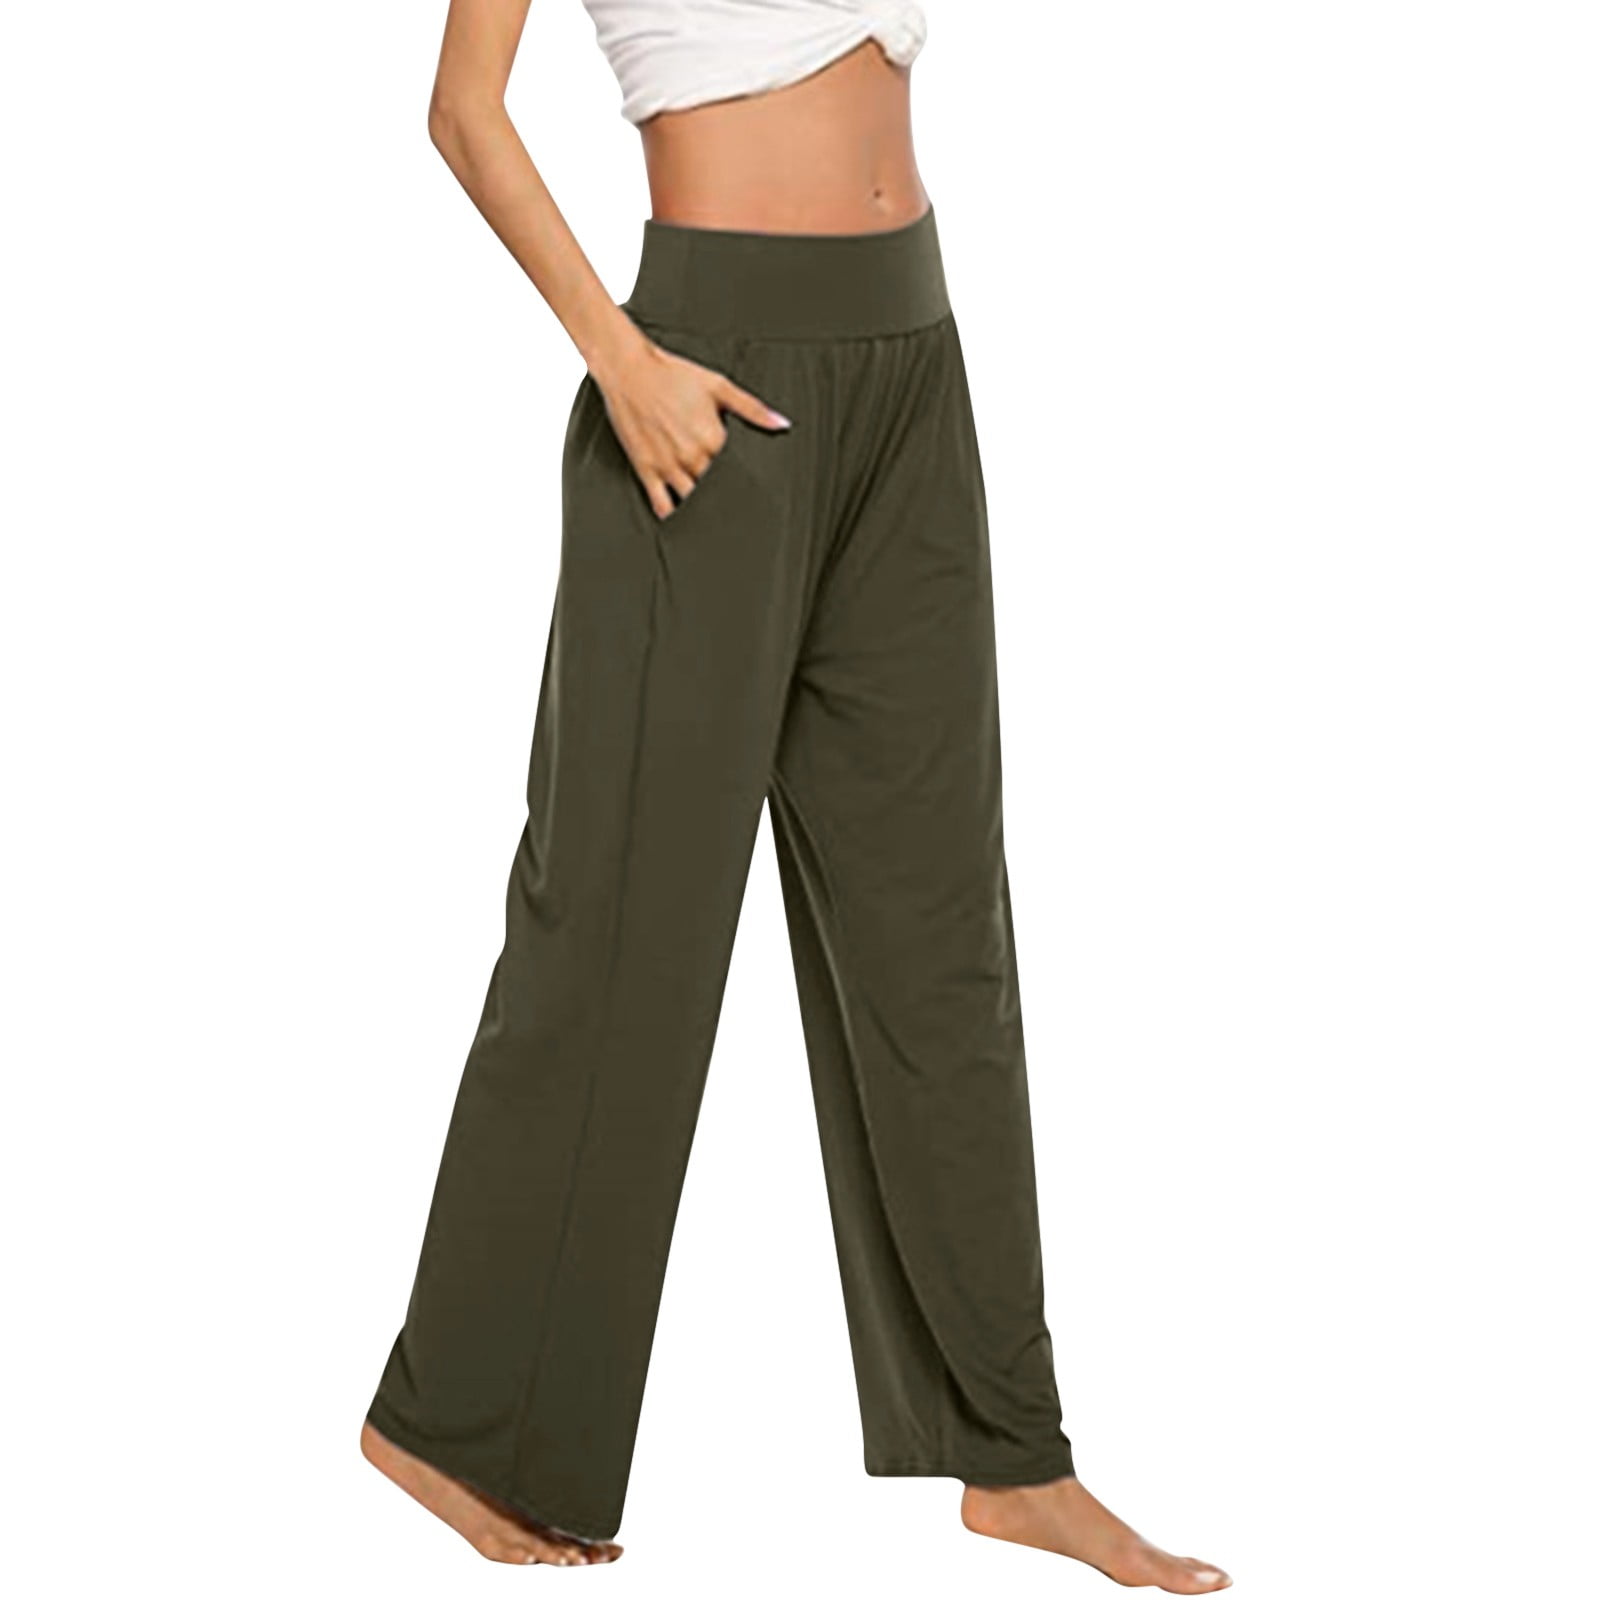 HSMQHJWE Yoga Pants For Tall Women Petite On Dress Pants For